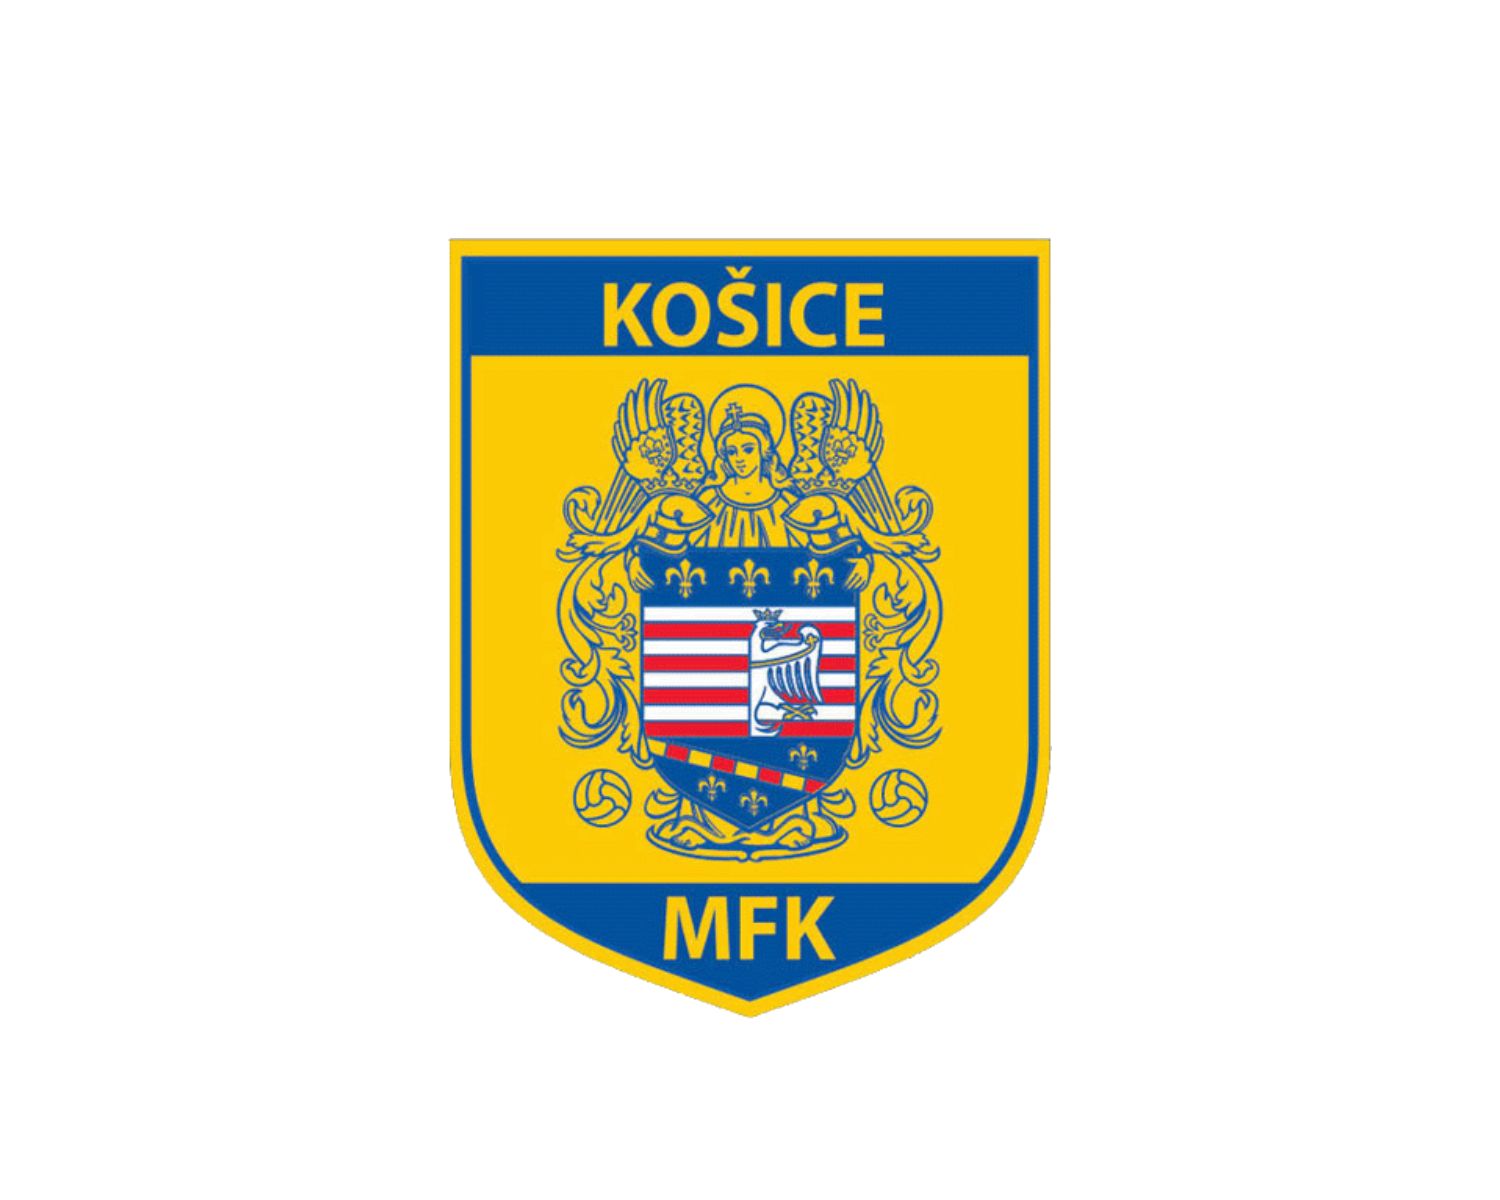 mfk-kosice-13-football-club-facts